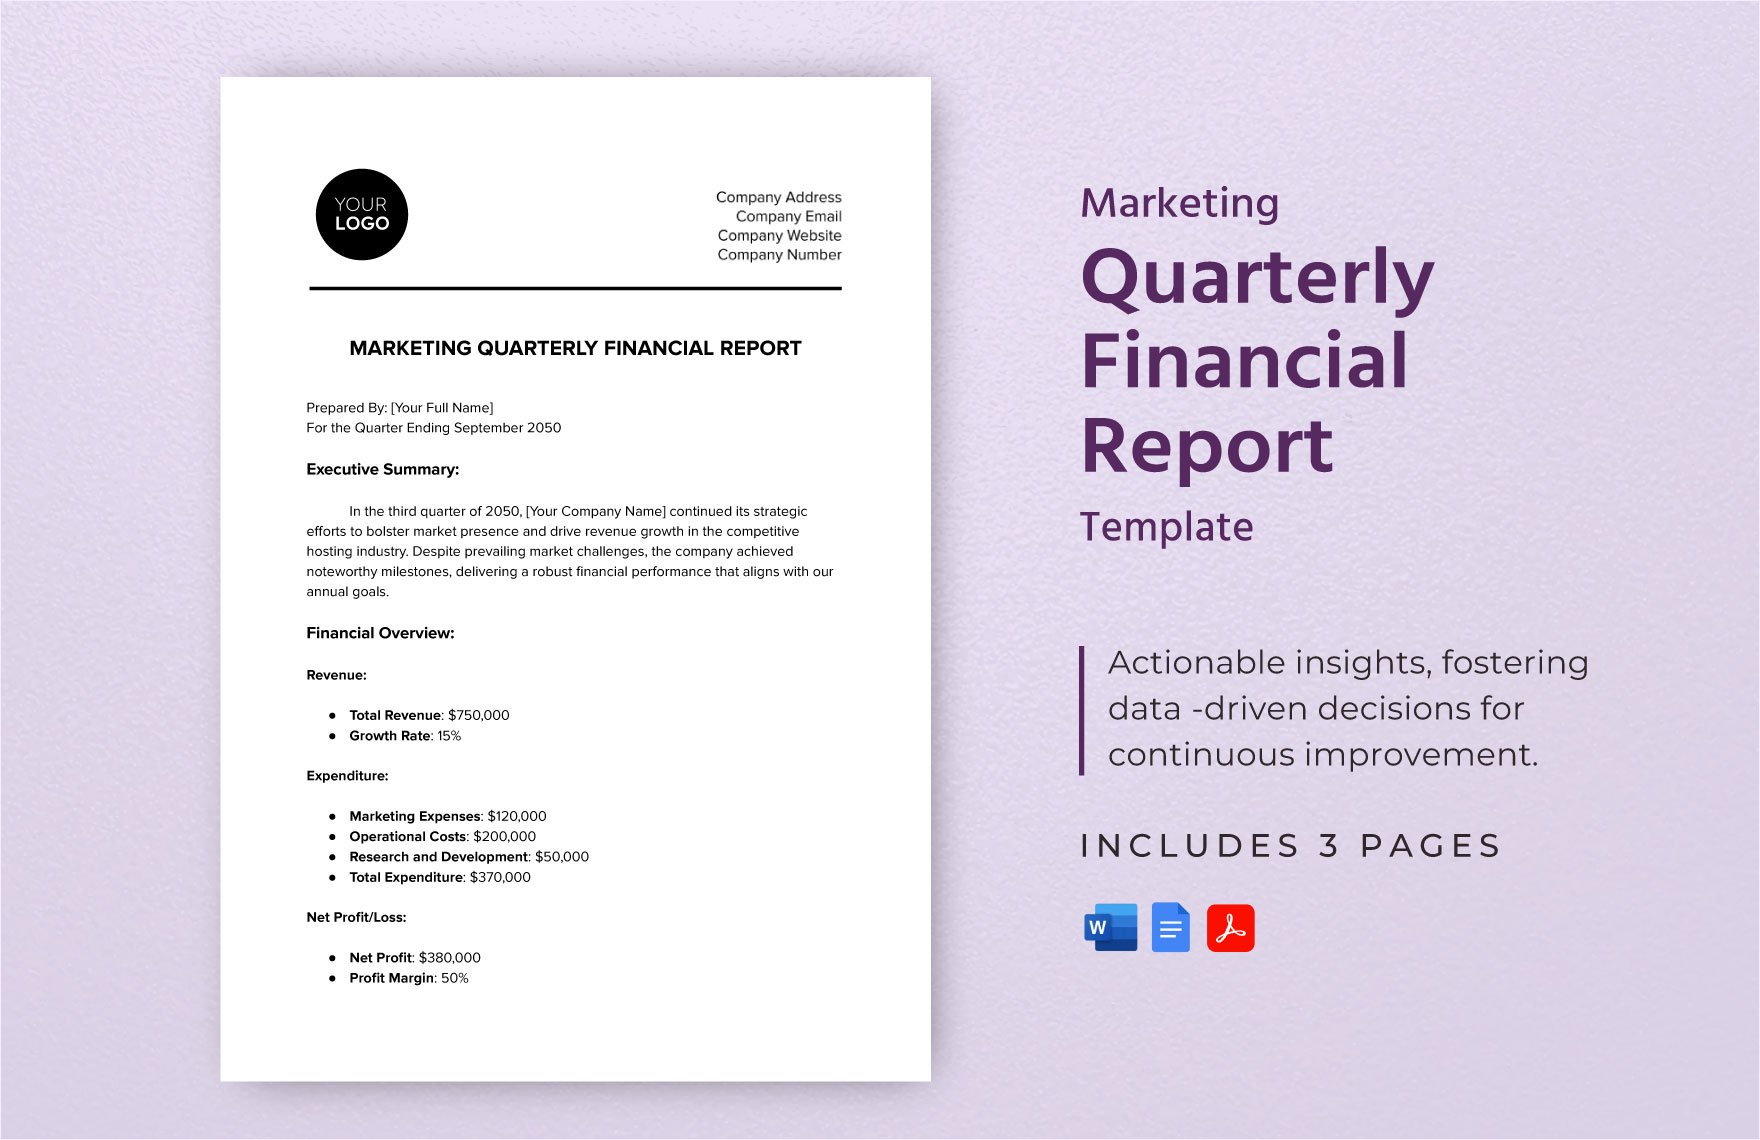 Marketing Quarterly Financial Report Template